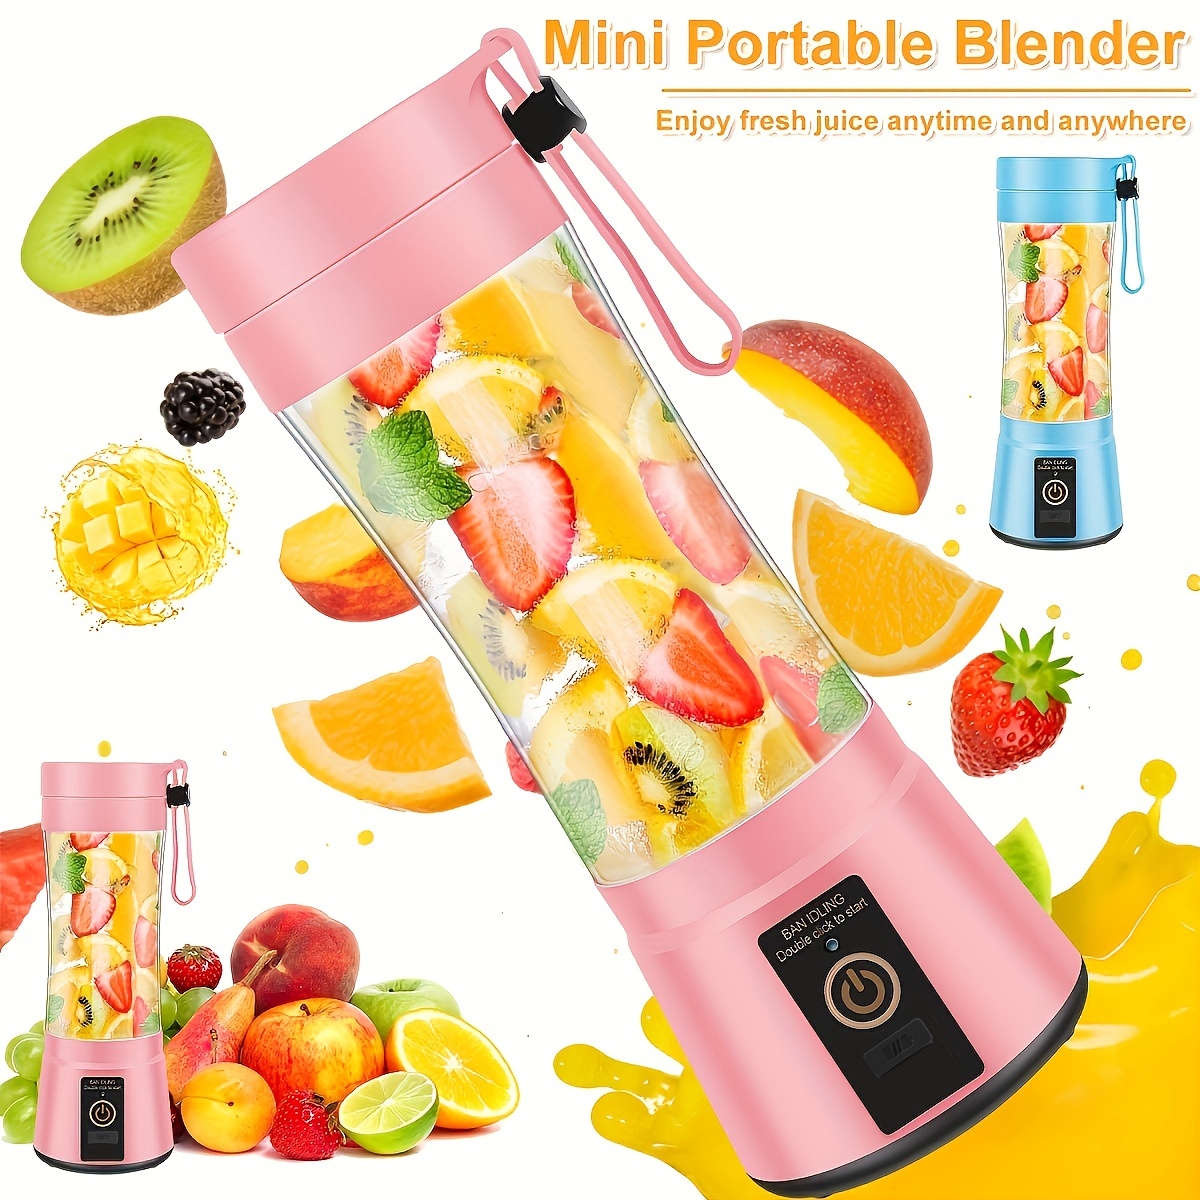 Portable Mini Juicer Straw Cup Juicing Cup USB Rechargeable Electric Juicer  Fruit Milkshake Blender.1PACK